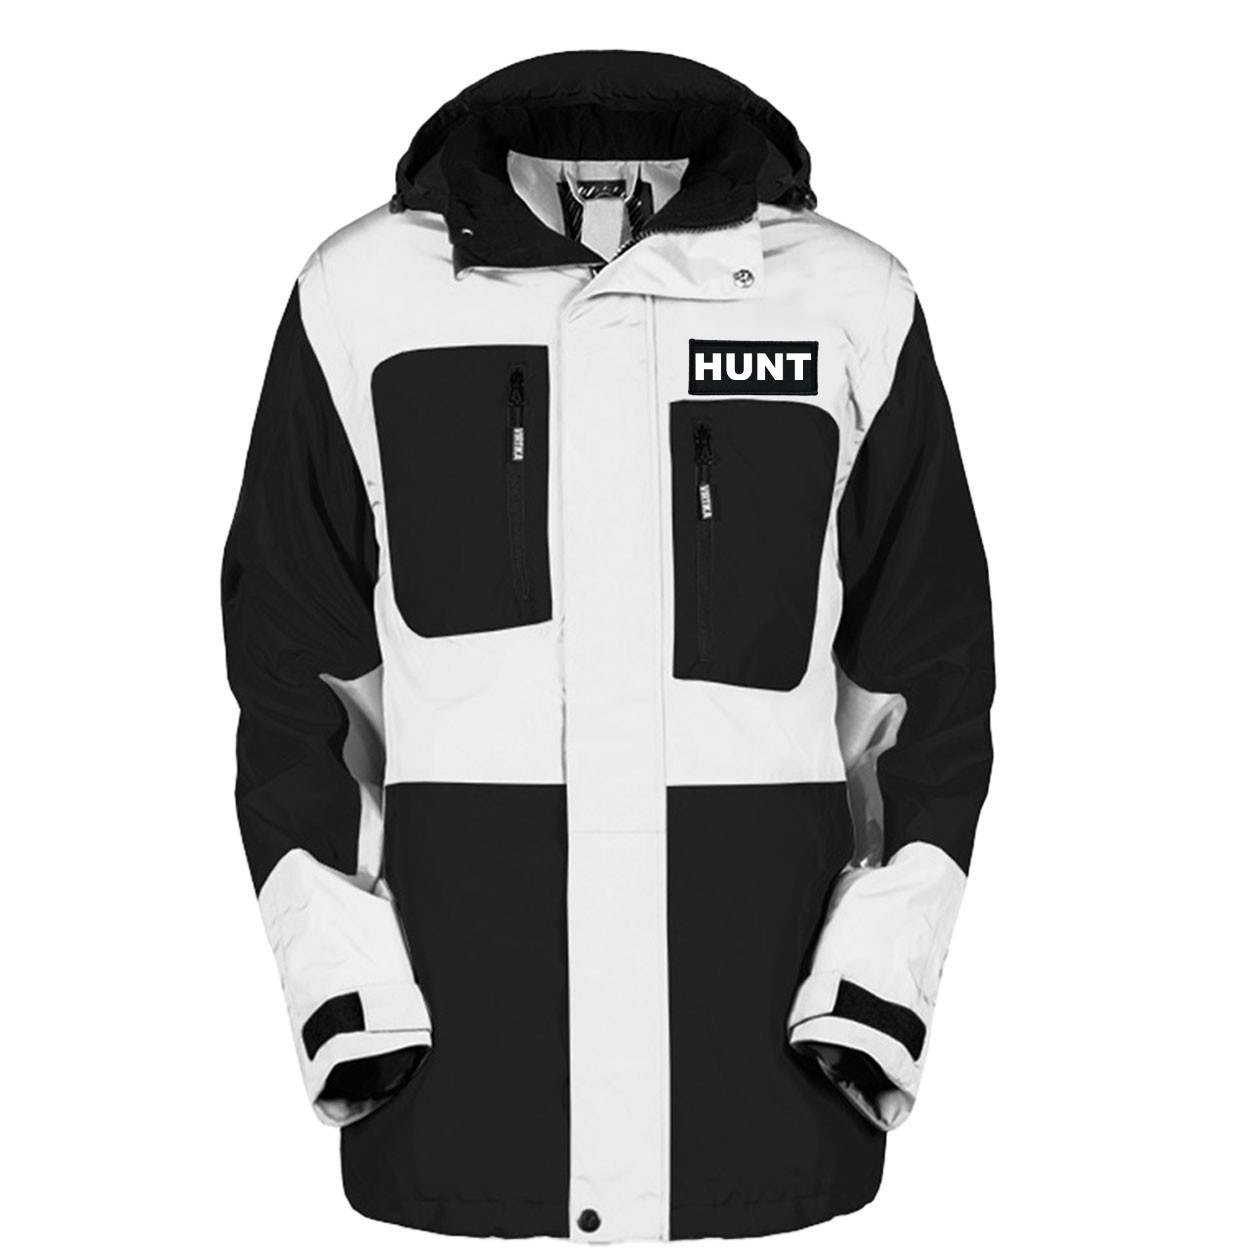 Hunt Brand Logo Pro Waterproof Breathable Winter Virtika Jacket Black/White (White Logo)